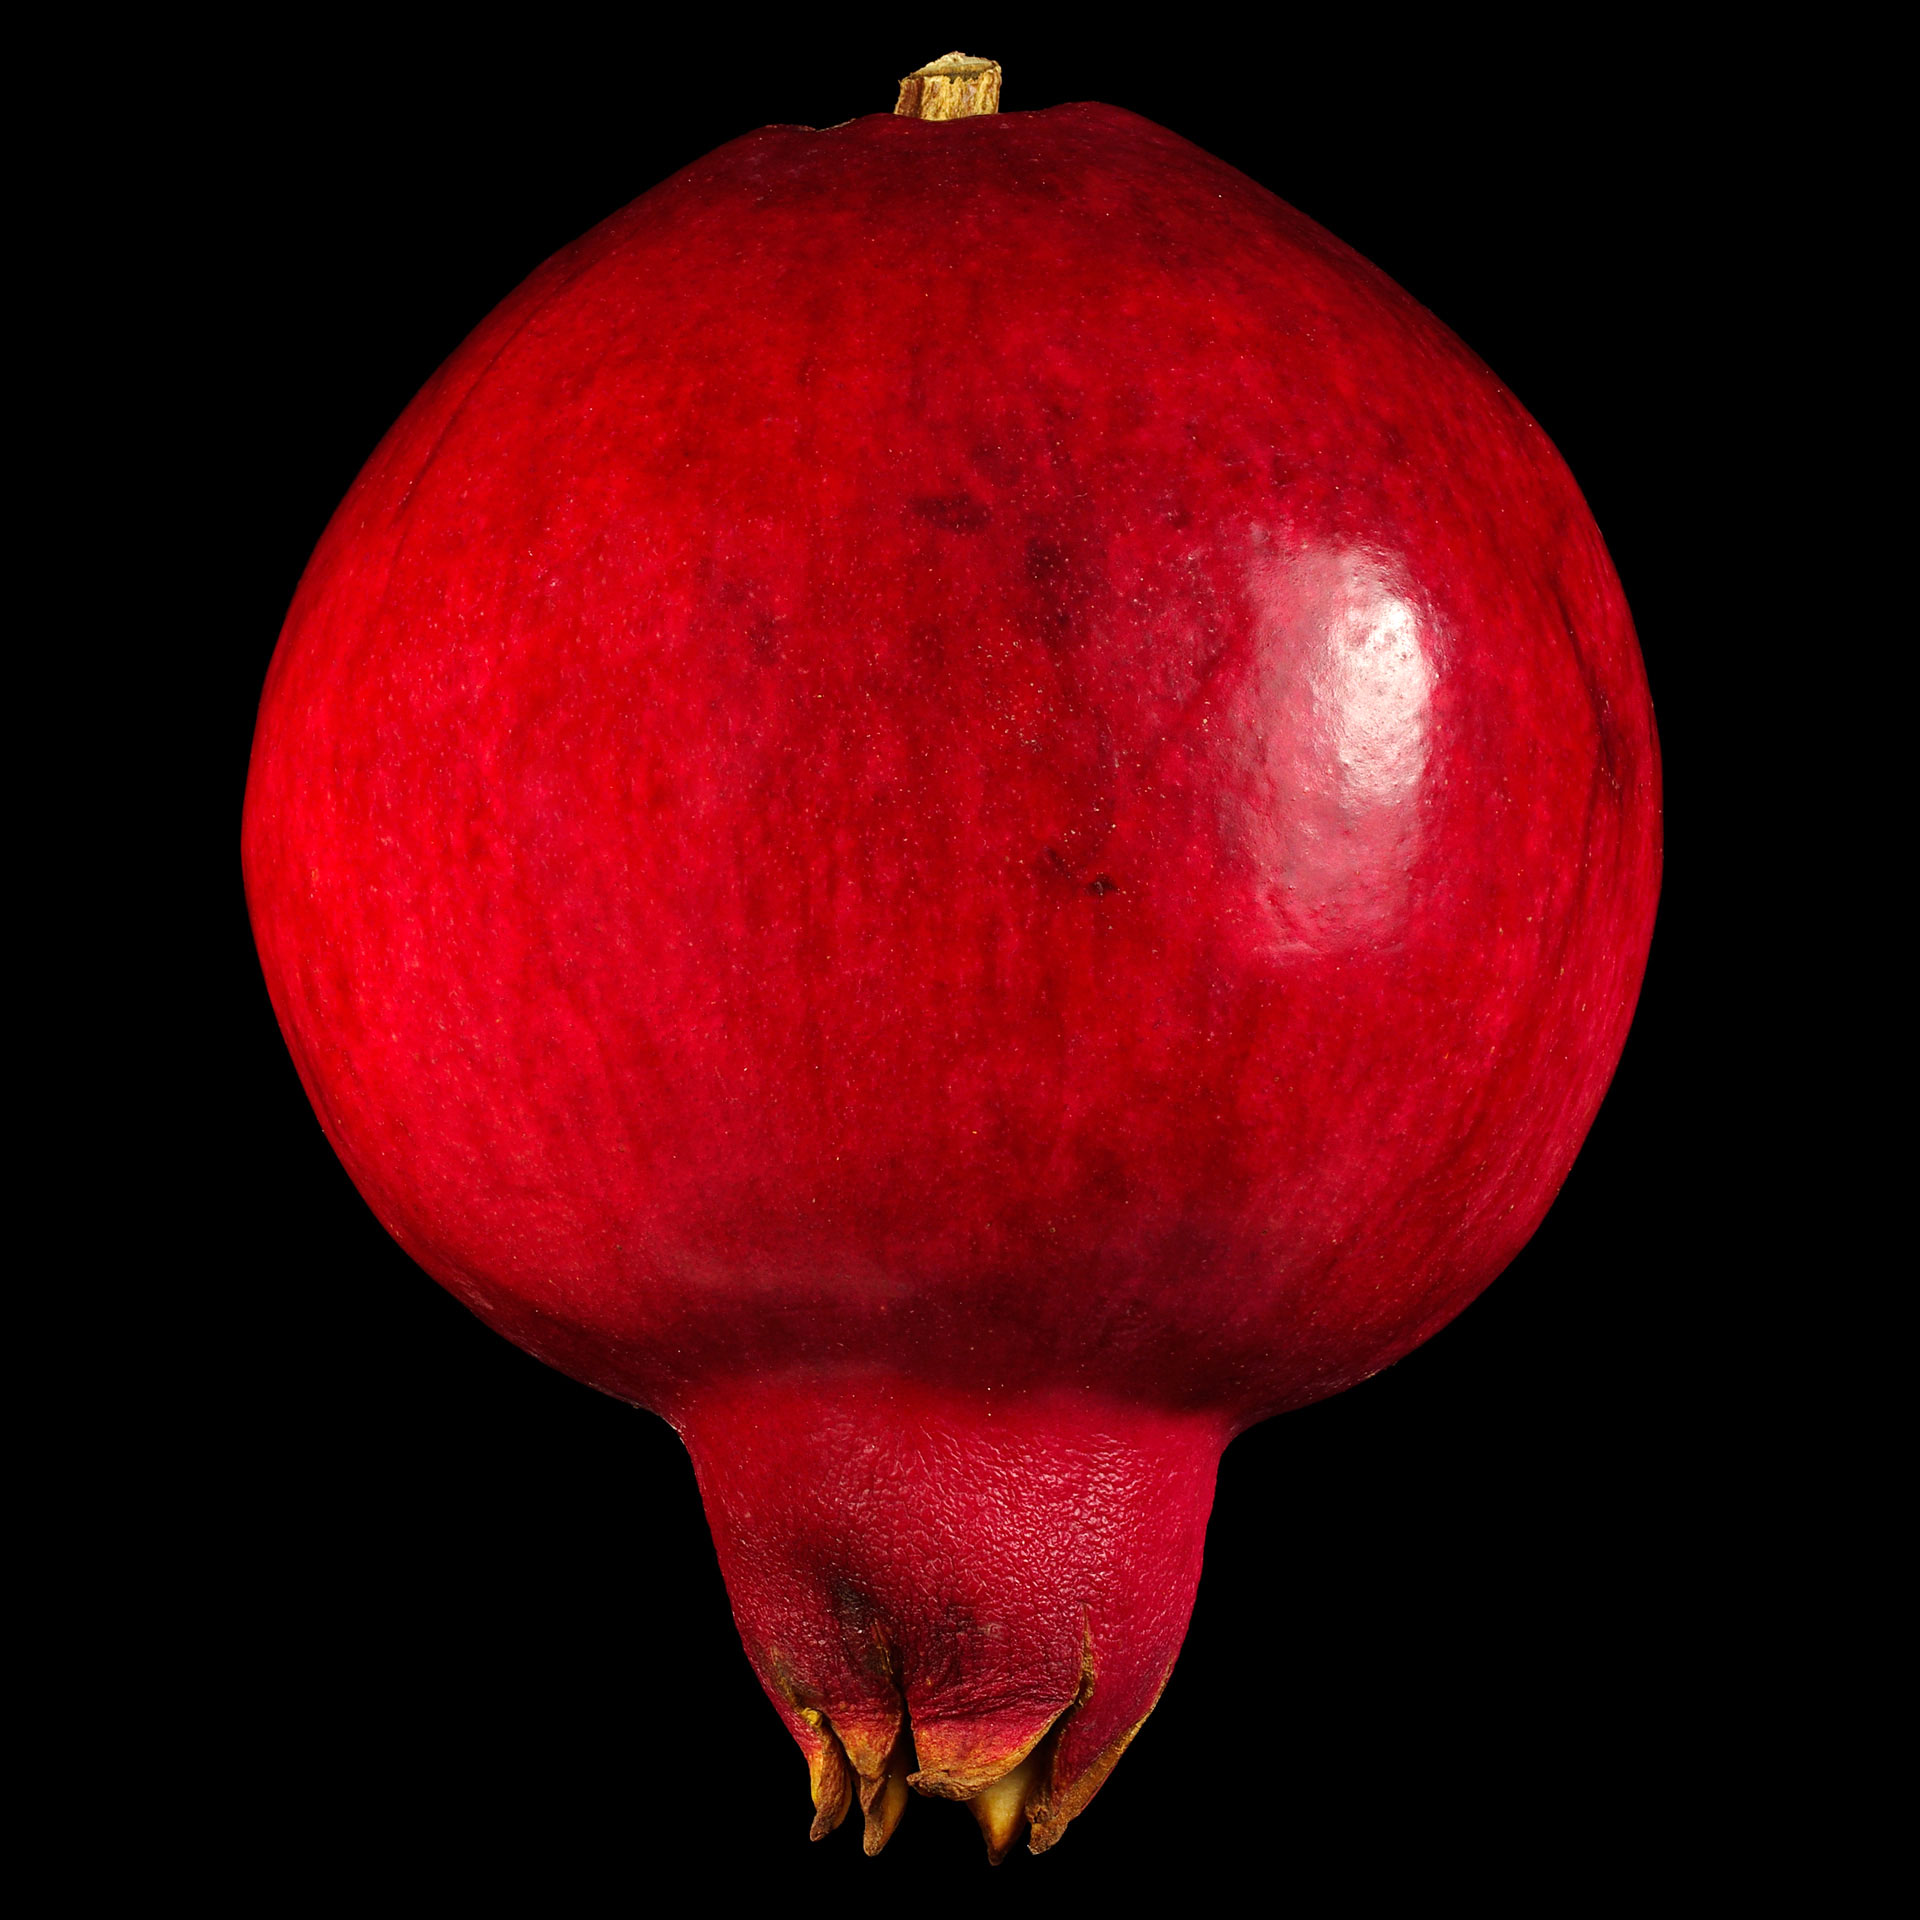 Pomegranate: Punica granatum